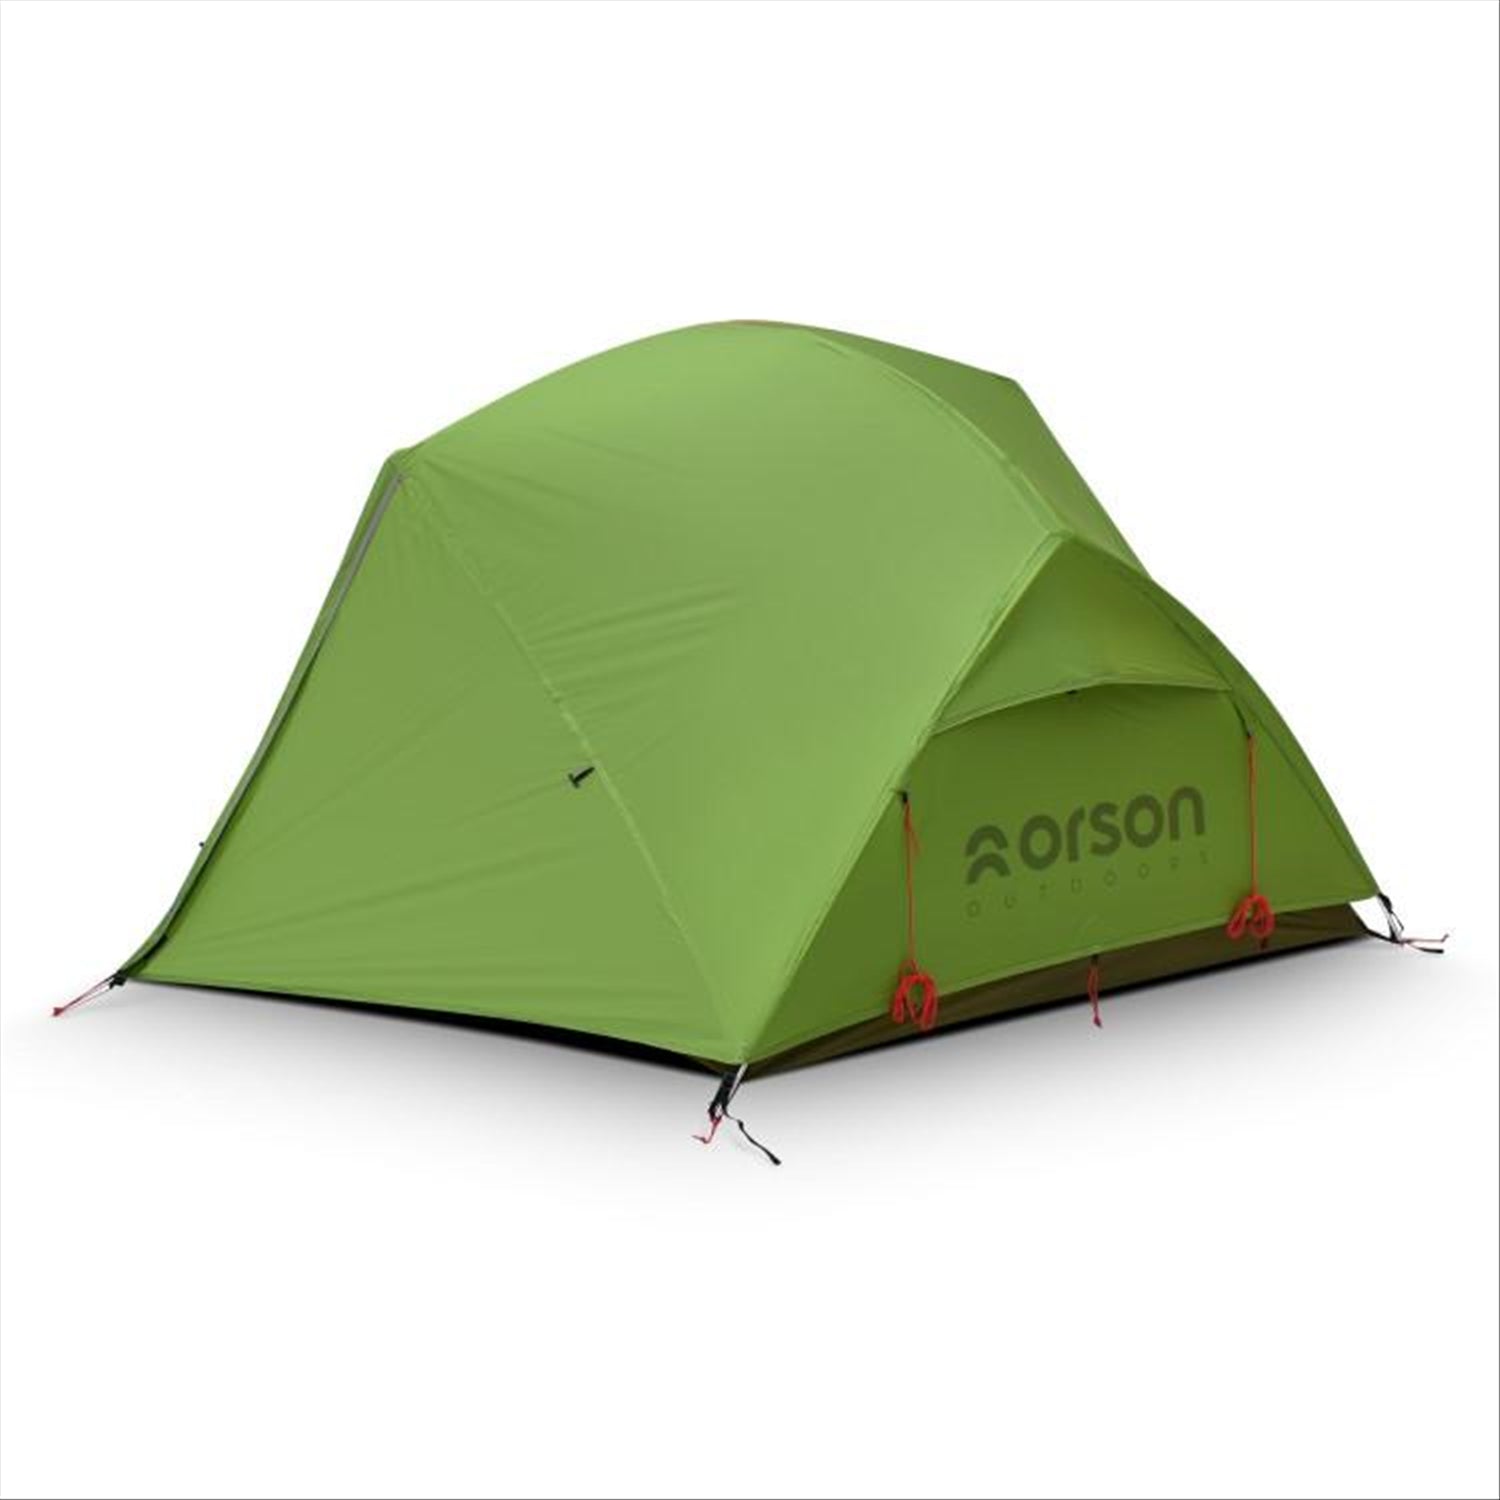 Hopper 2 - Silnylon Lightweight 2 Person Hiking Tent, 2.05kg